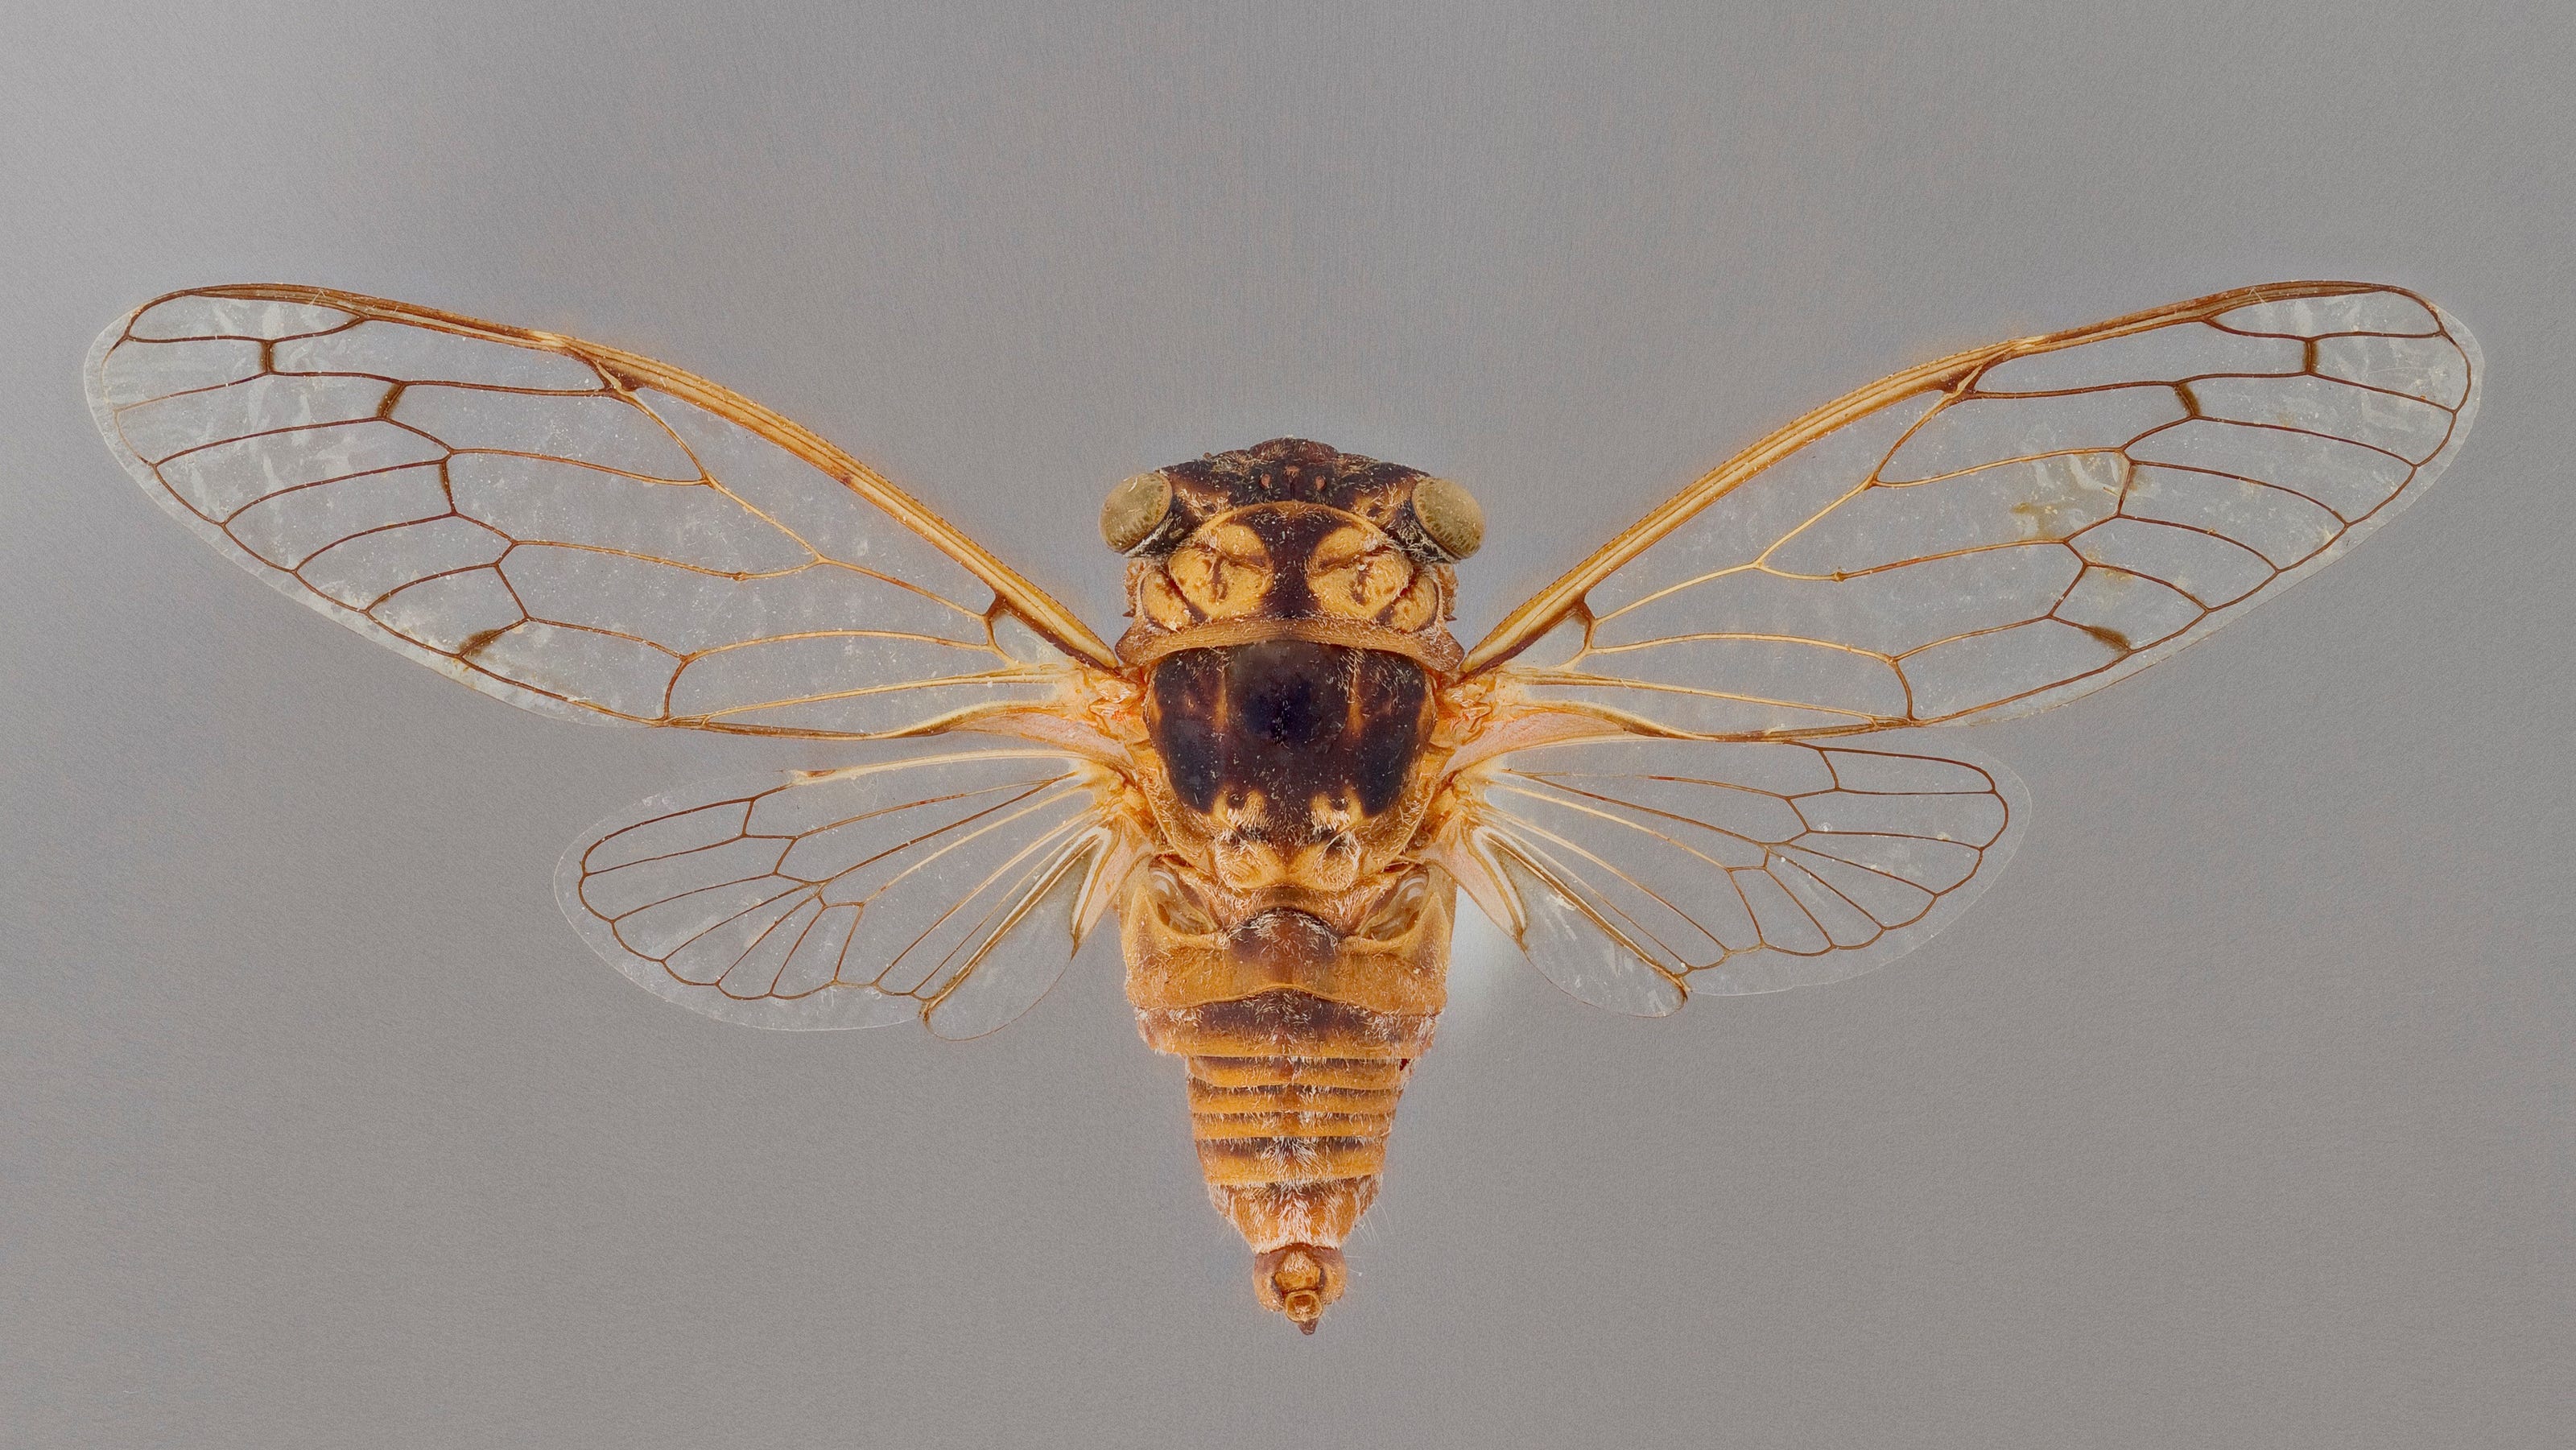 Arizona cicada season Does that buzzing predict the monsoon rain?